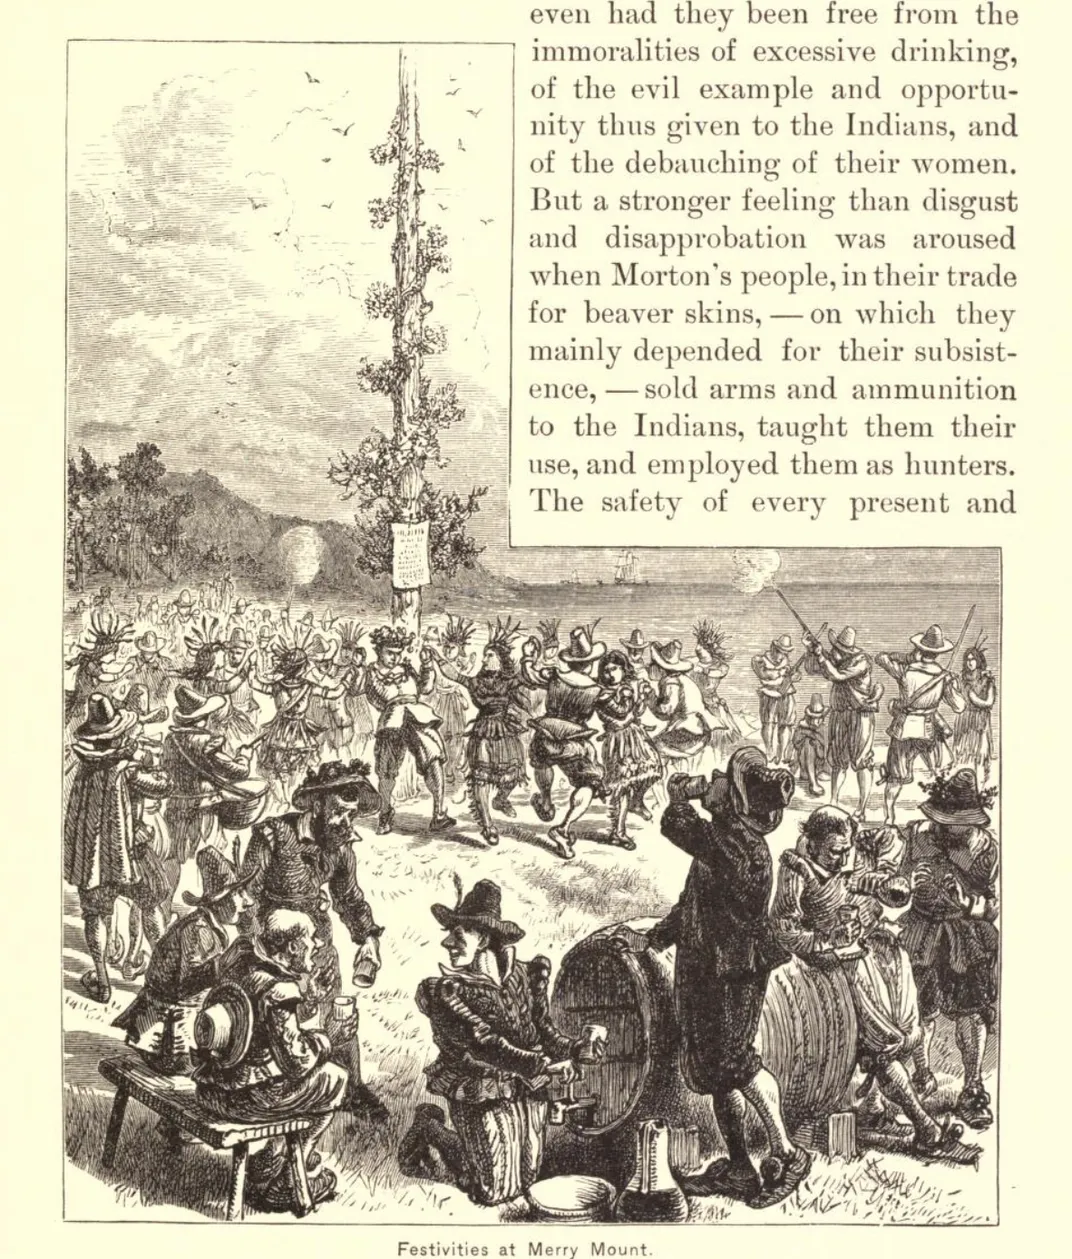 Illustration of the maypole in Morton's Merrymount colony